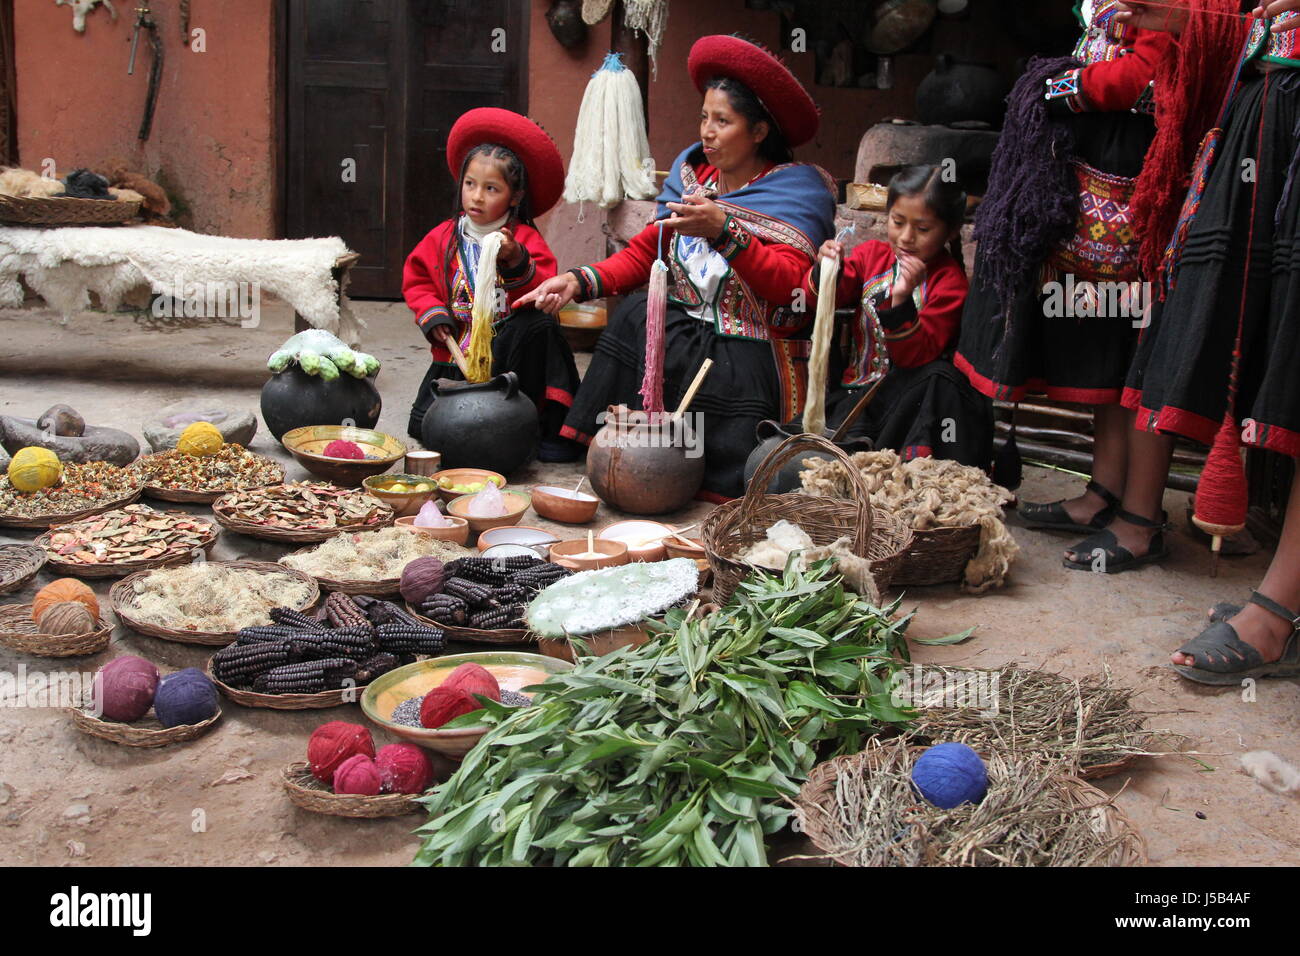 Rendendo tessile in Perù Foto Stock